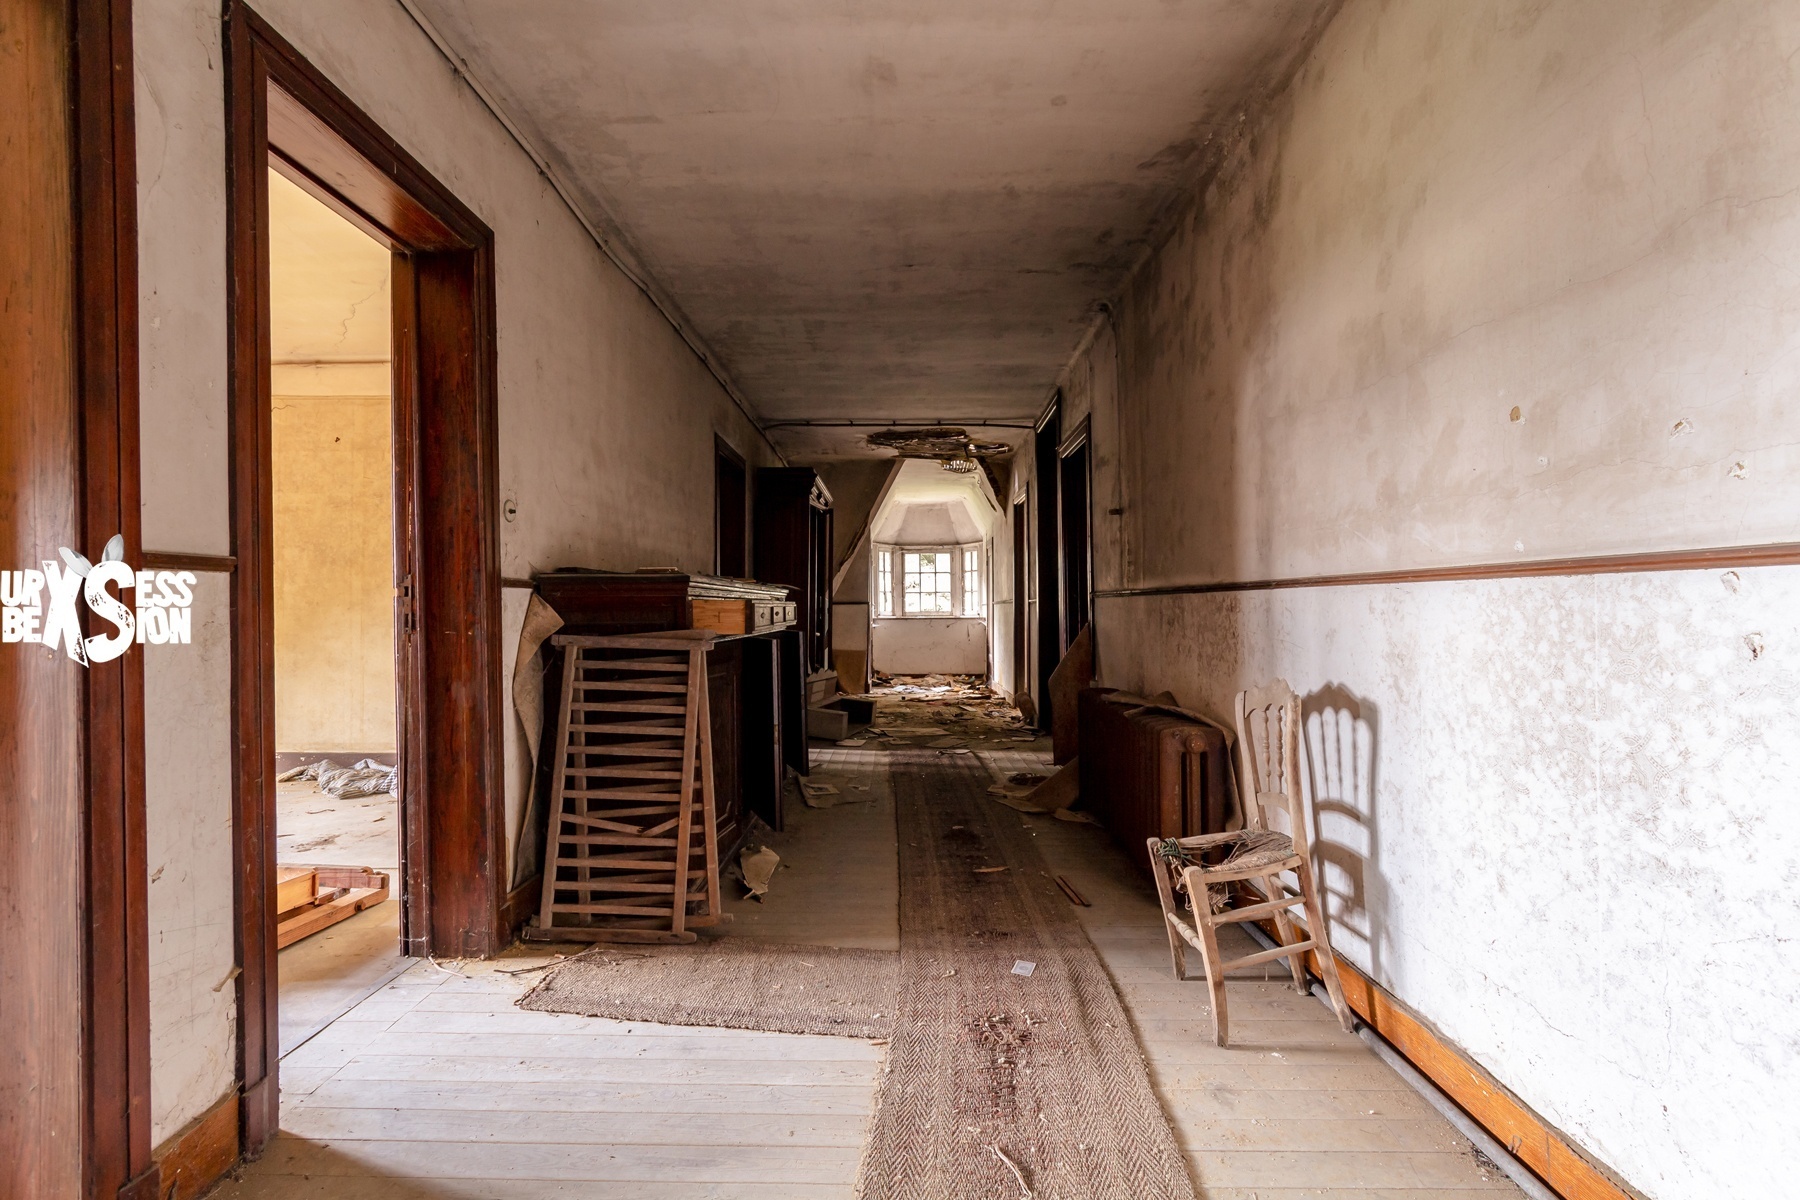 Villa abandonnée en Belgique - Urbex